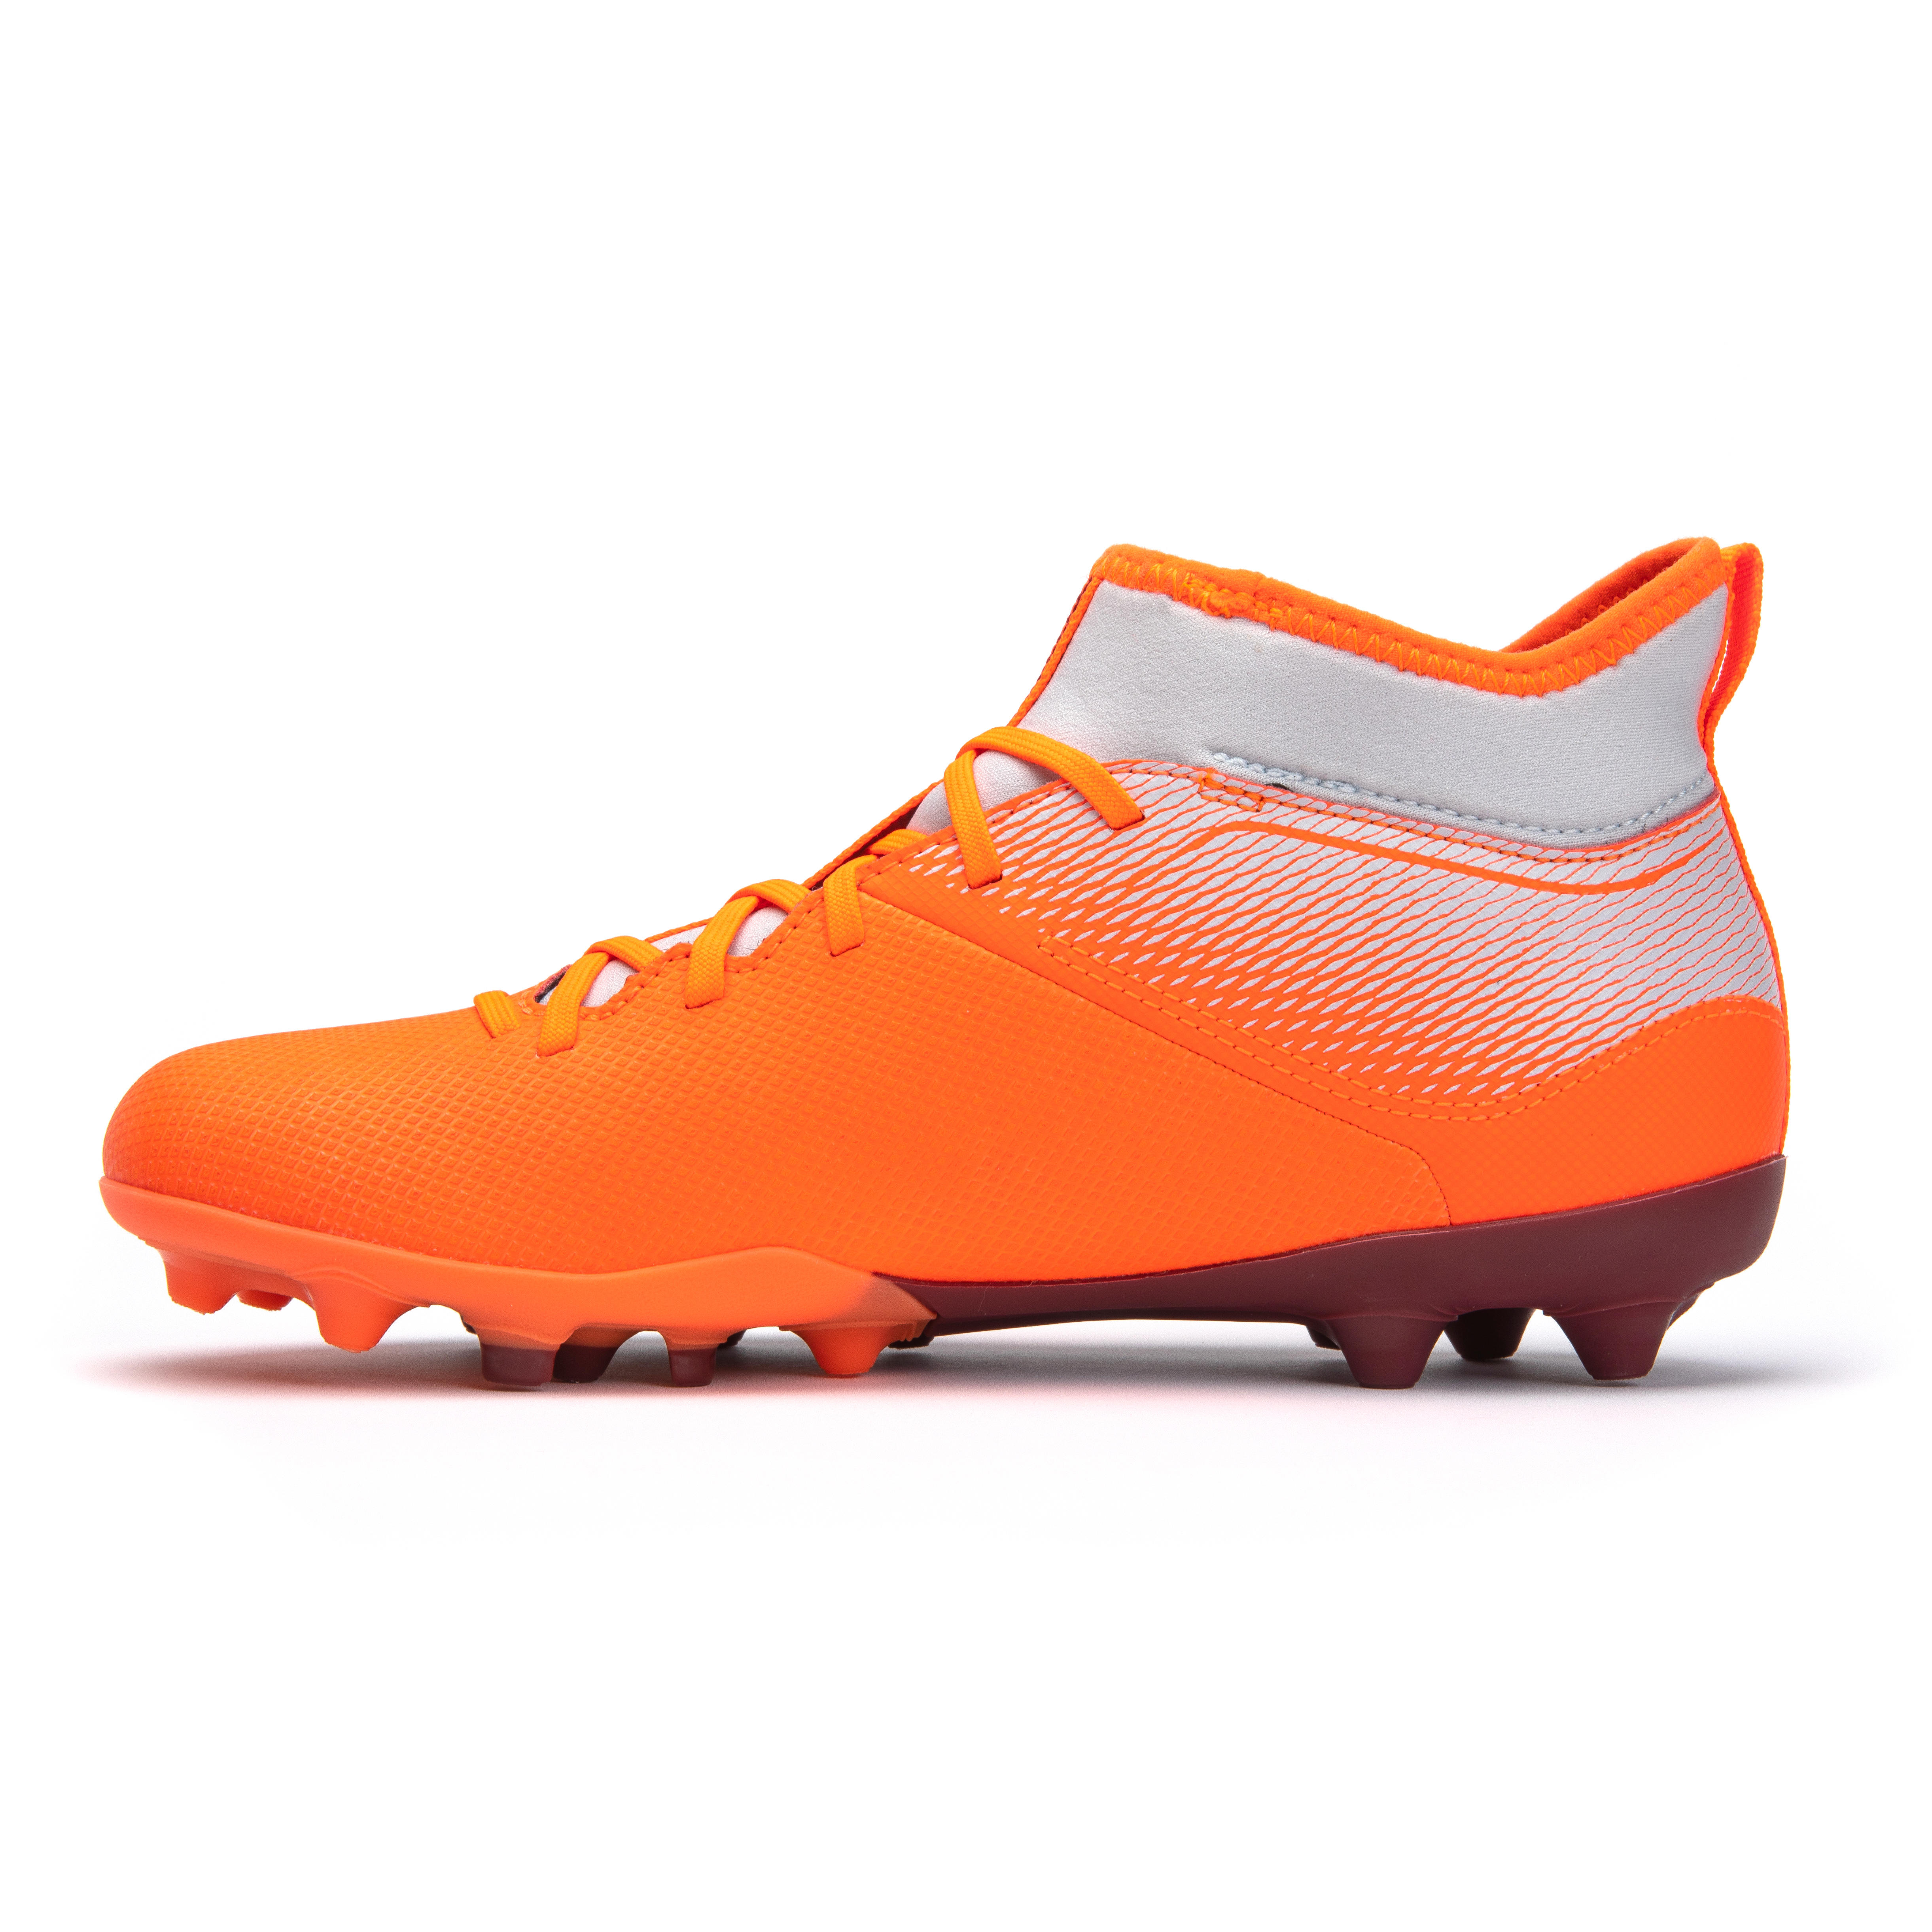 grey and orange nike football boots